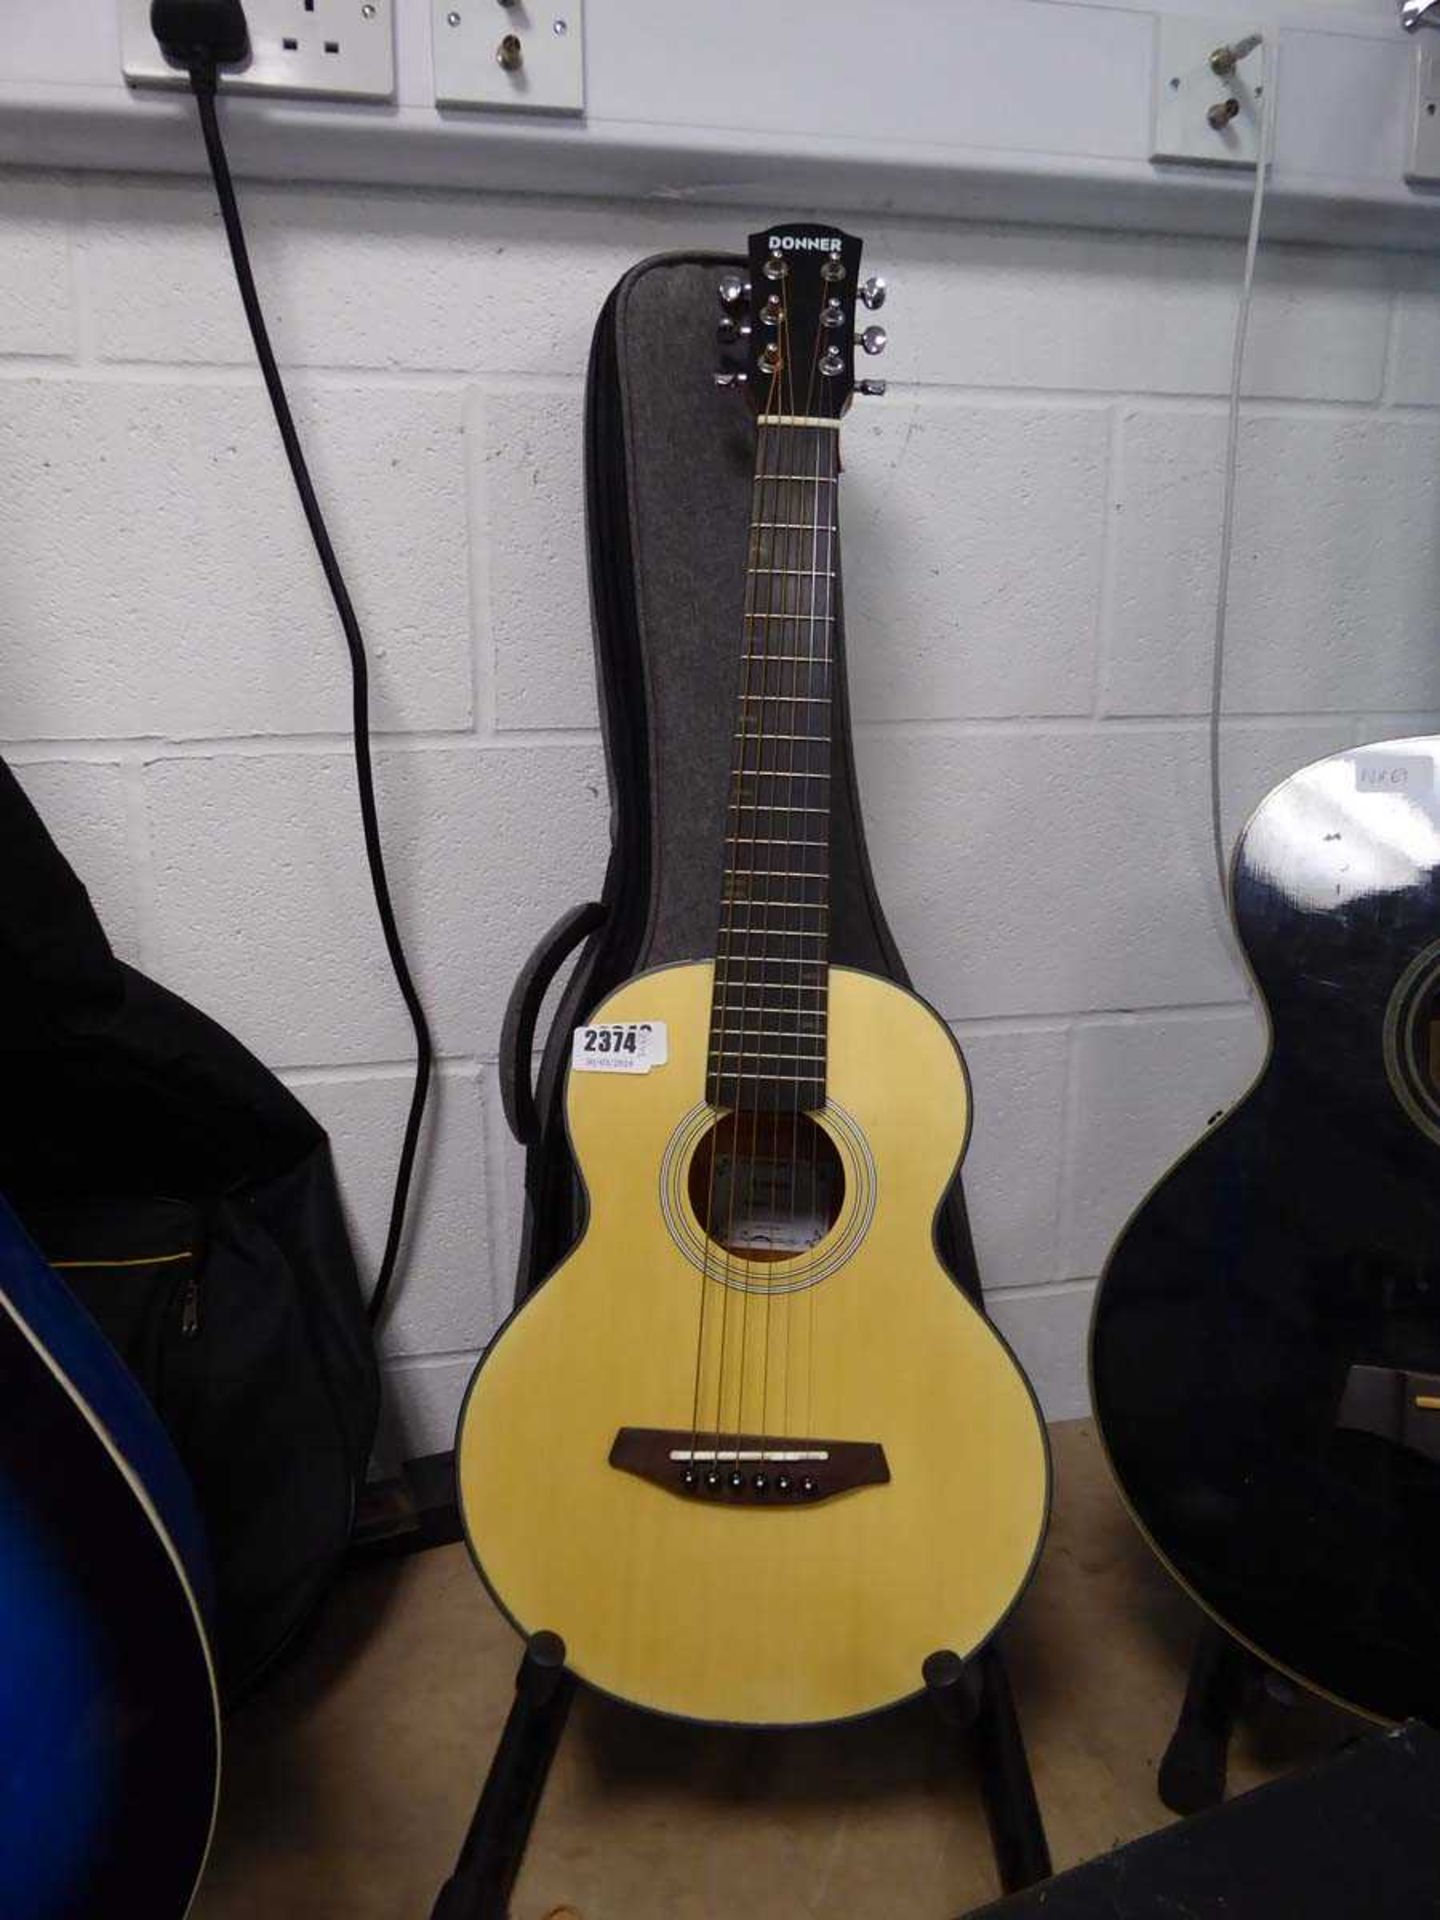 Donner acoustic guitar in case